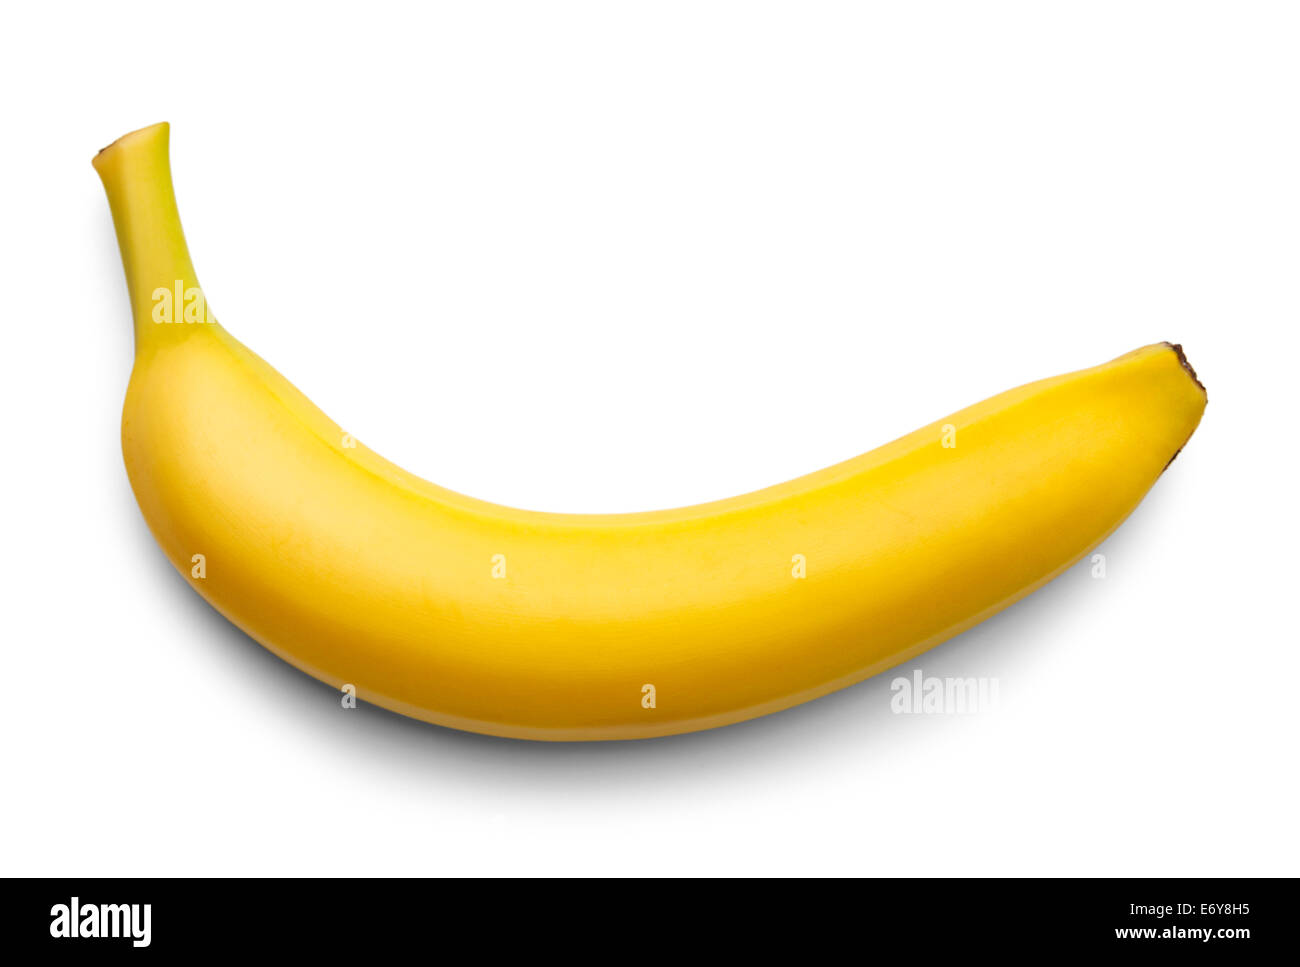 Einzelne gelbe Banane, Isolated on White Background. Stockfoto